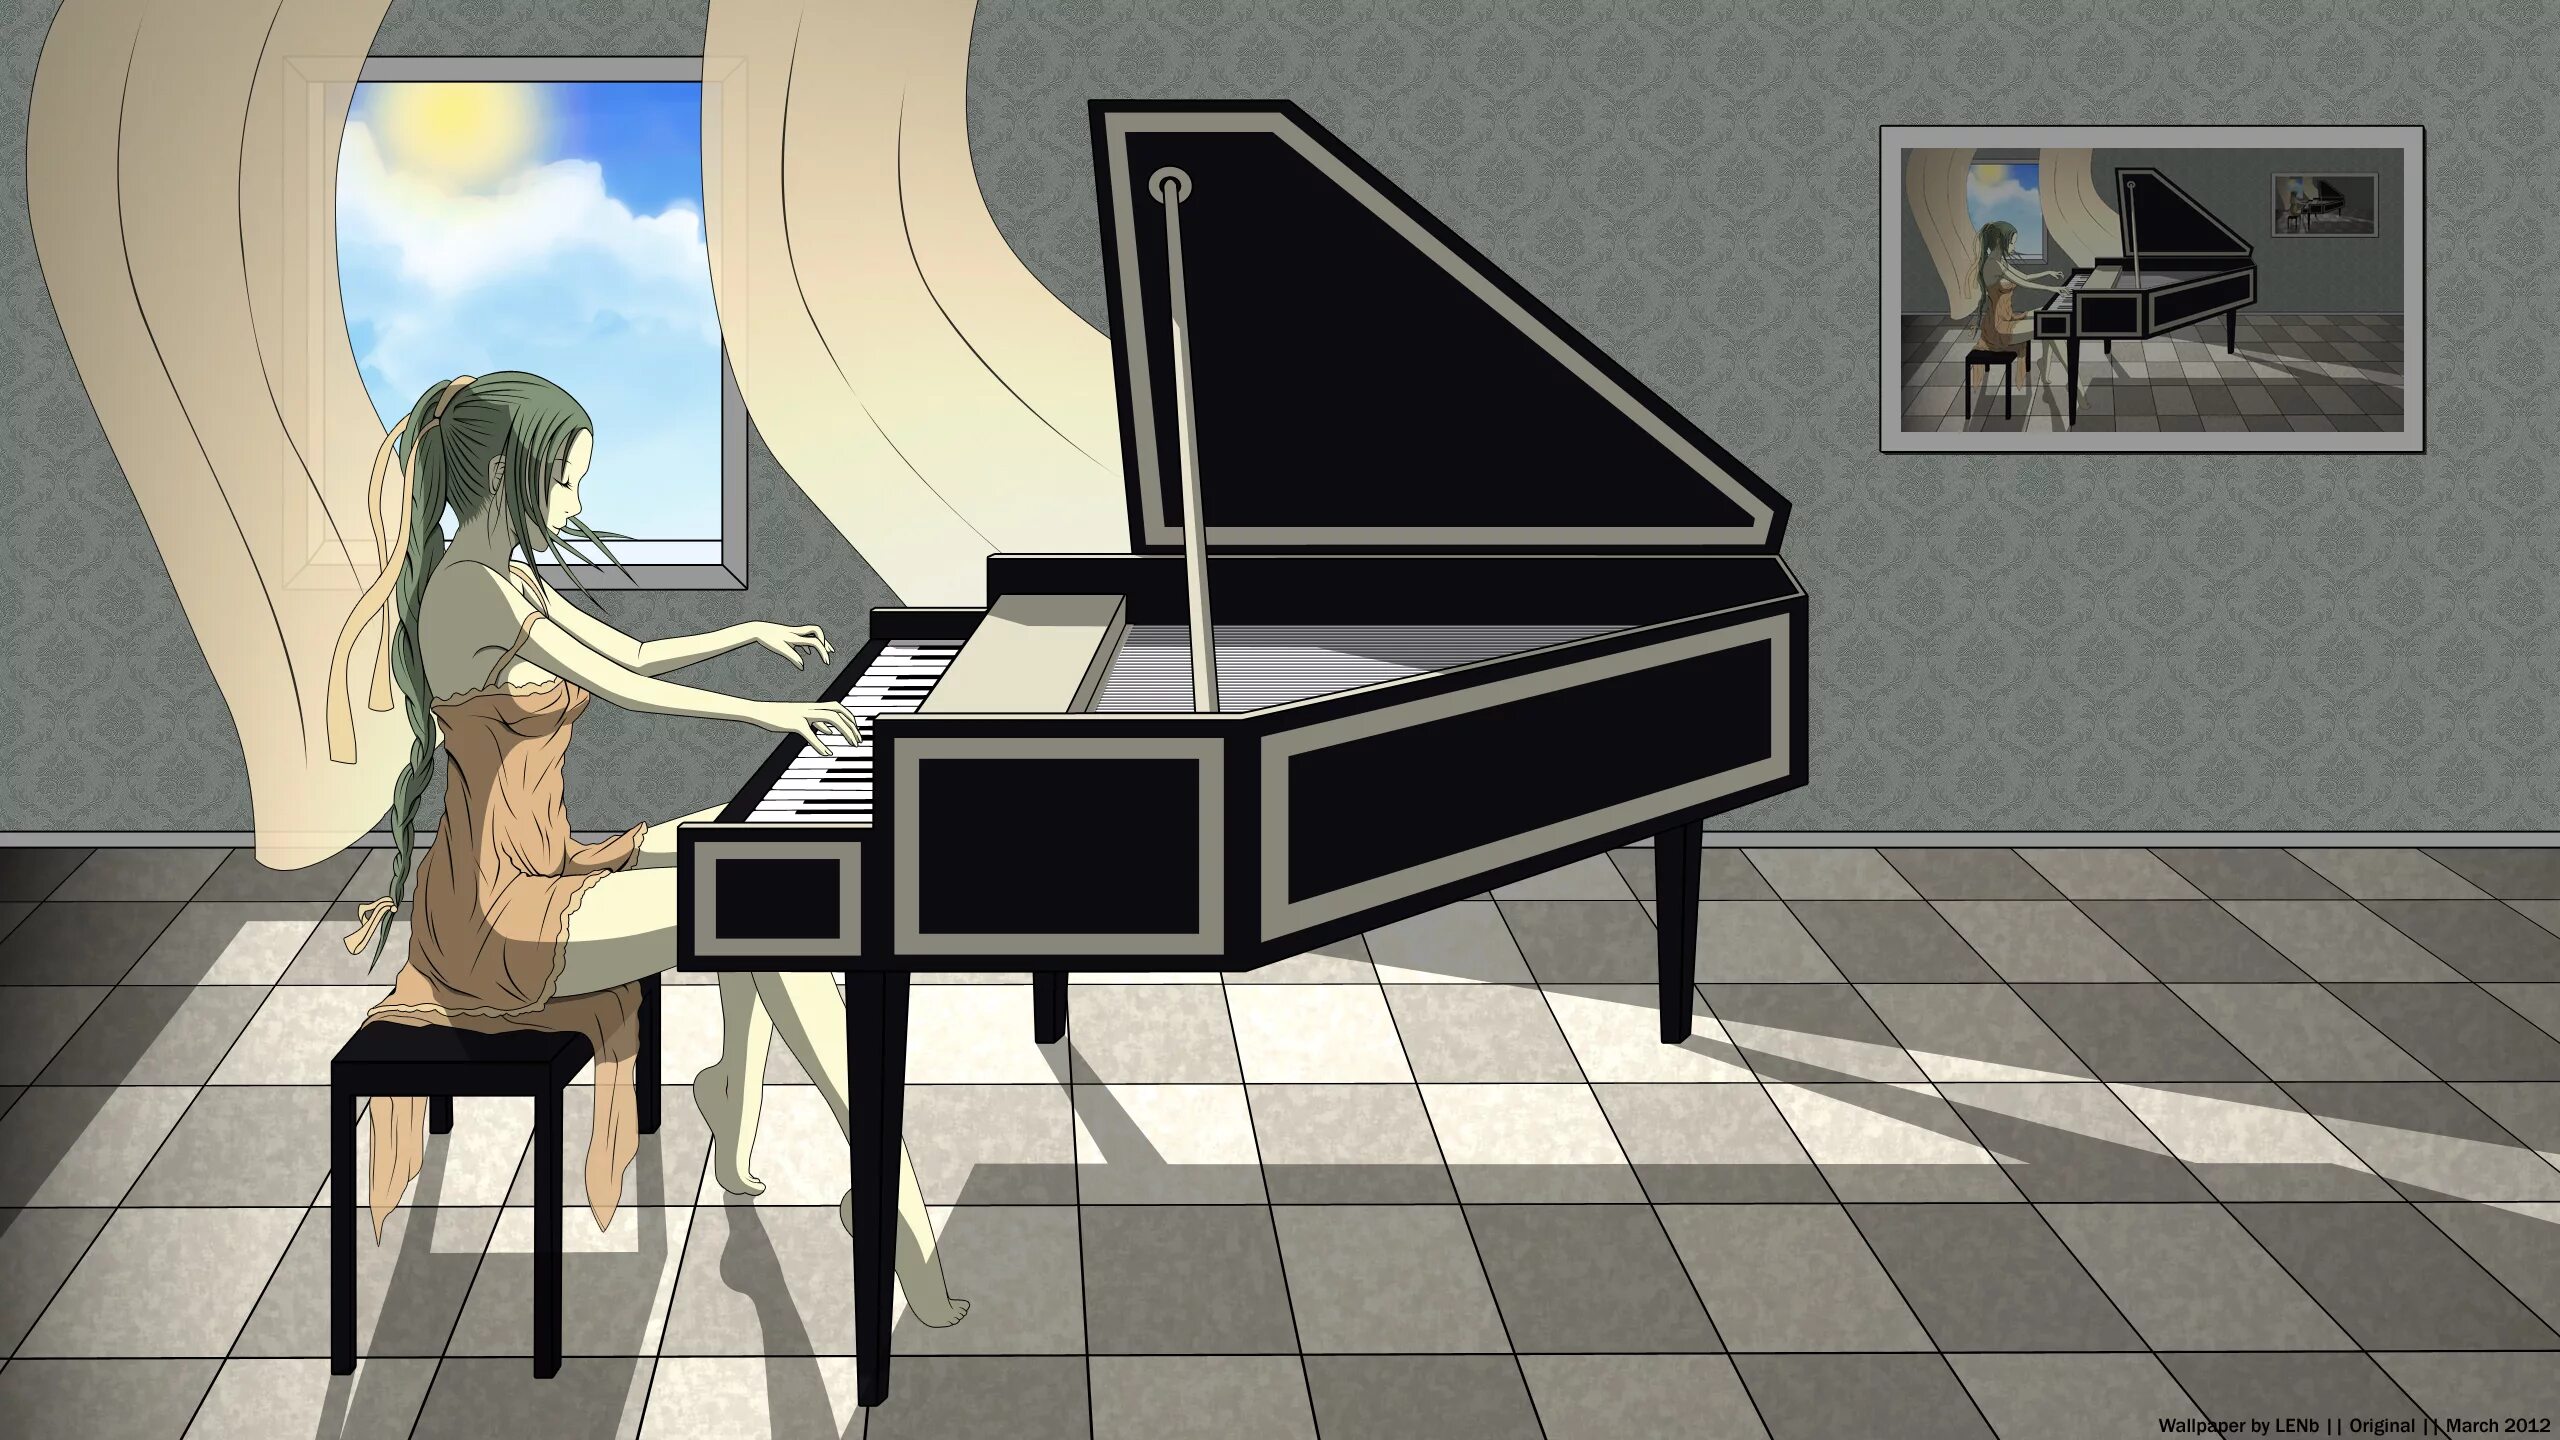 Плохо играет на пианино. Пианино арт. Девушка и пианино.